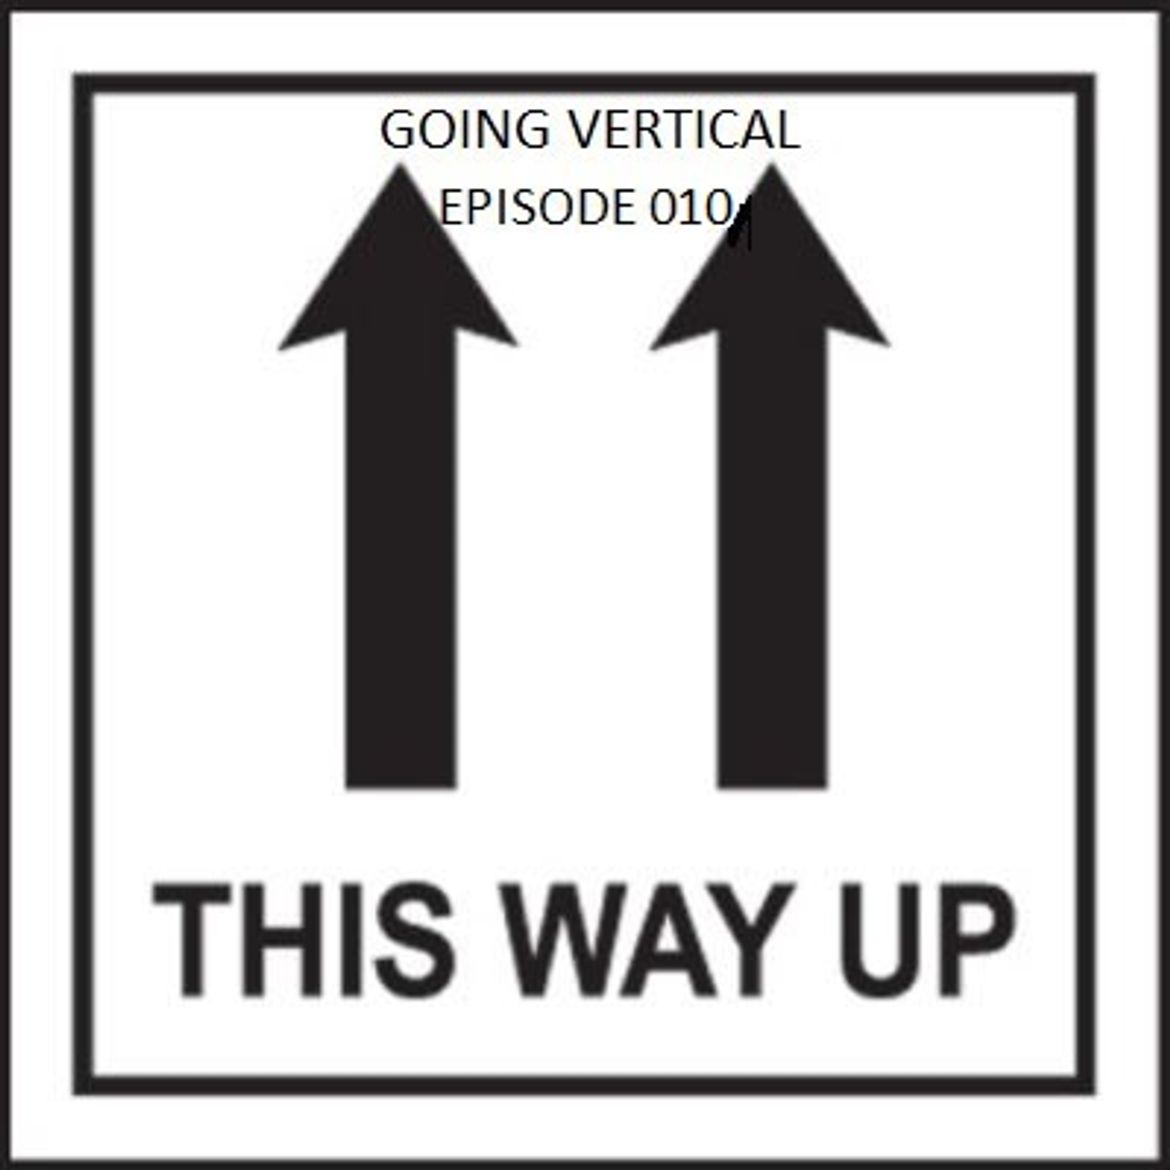 Its this way. This way. Way up. Way up лого. This way up знак.